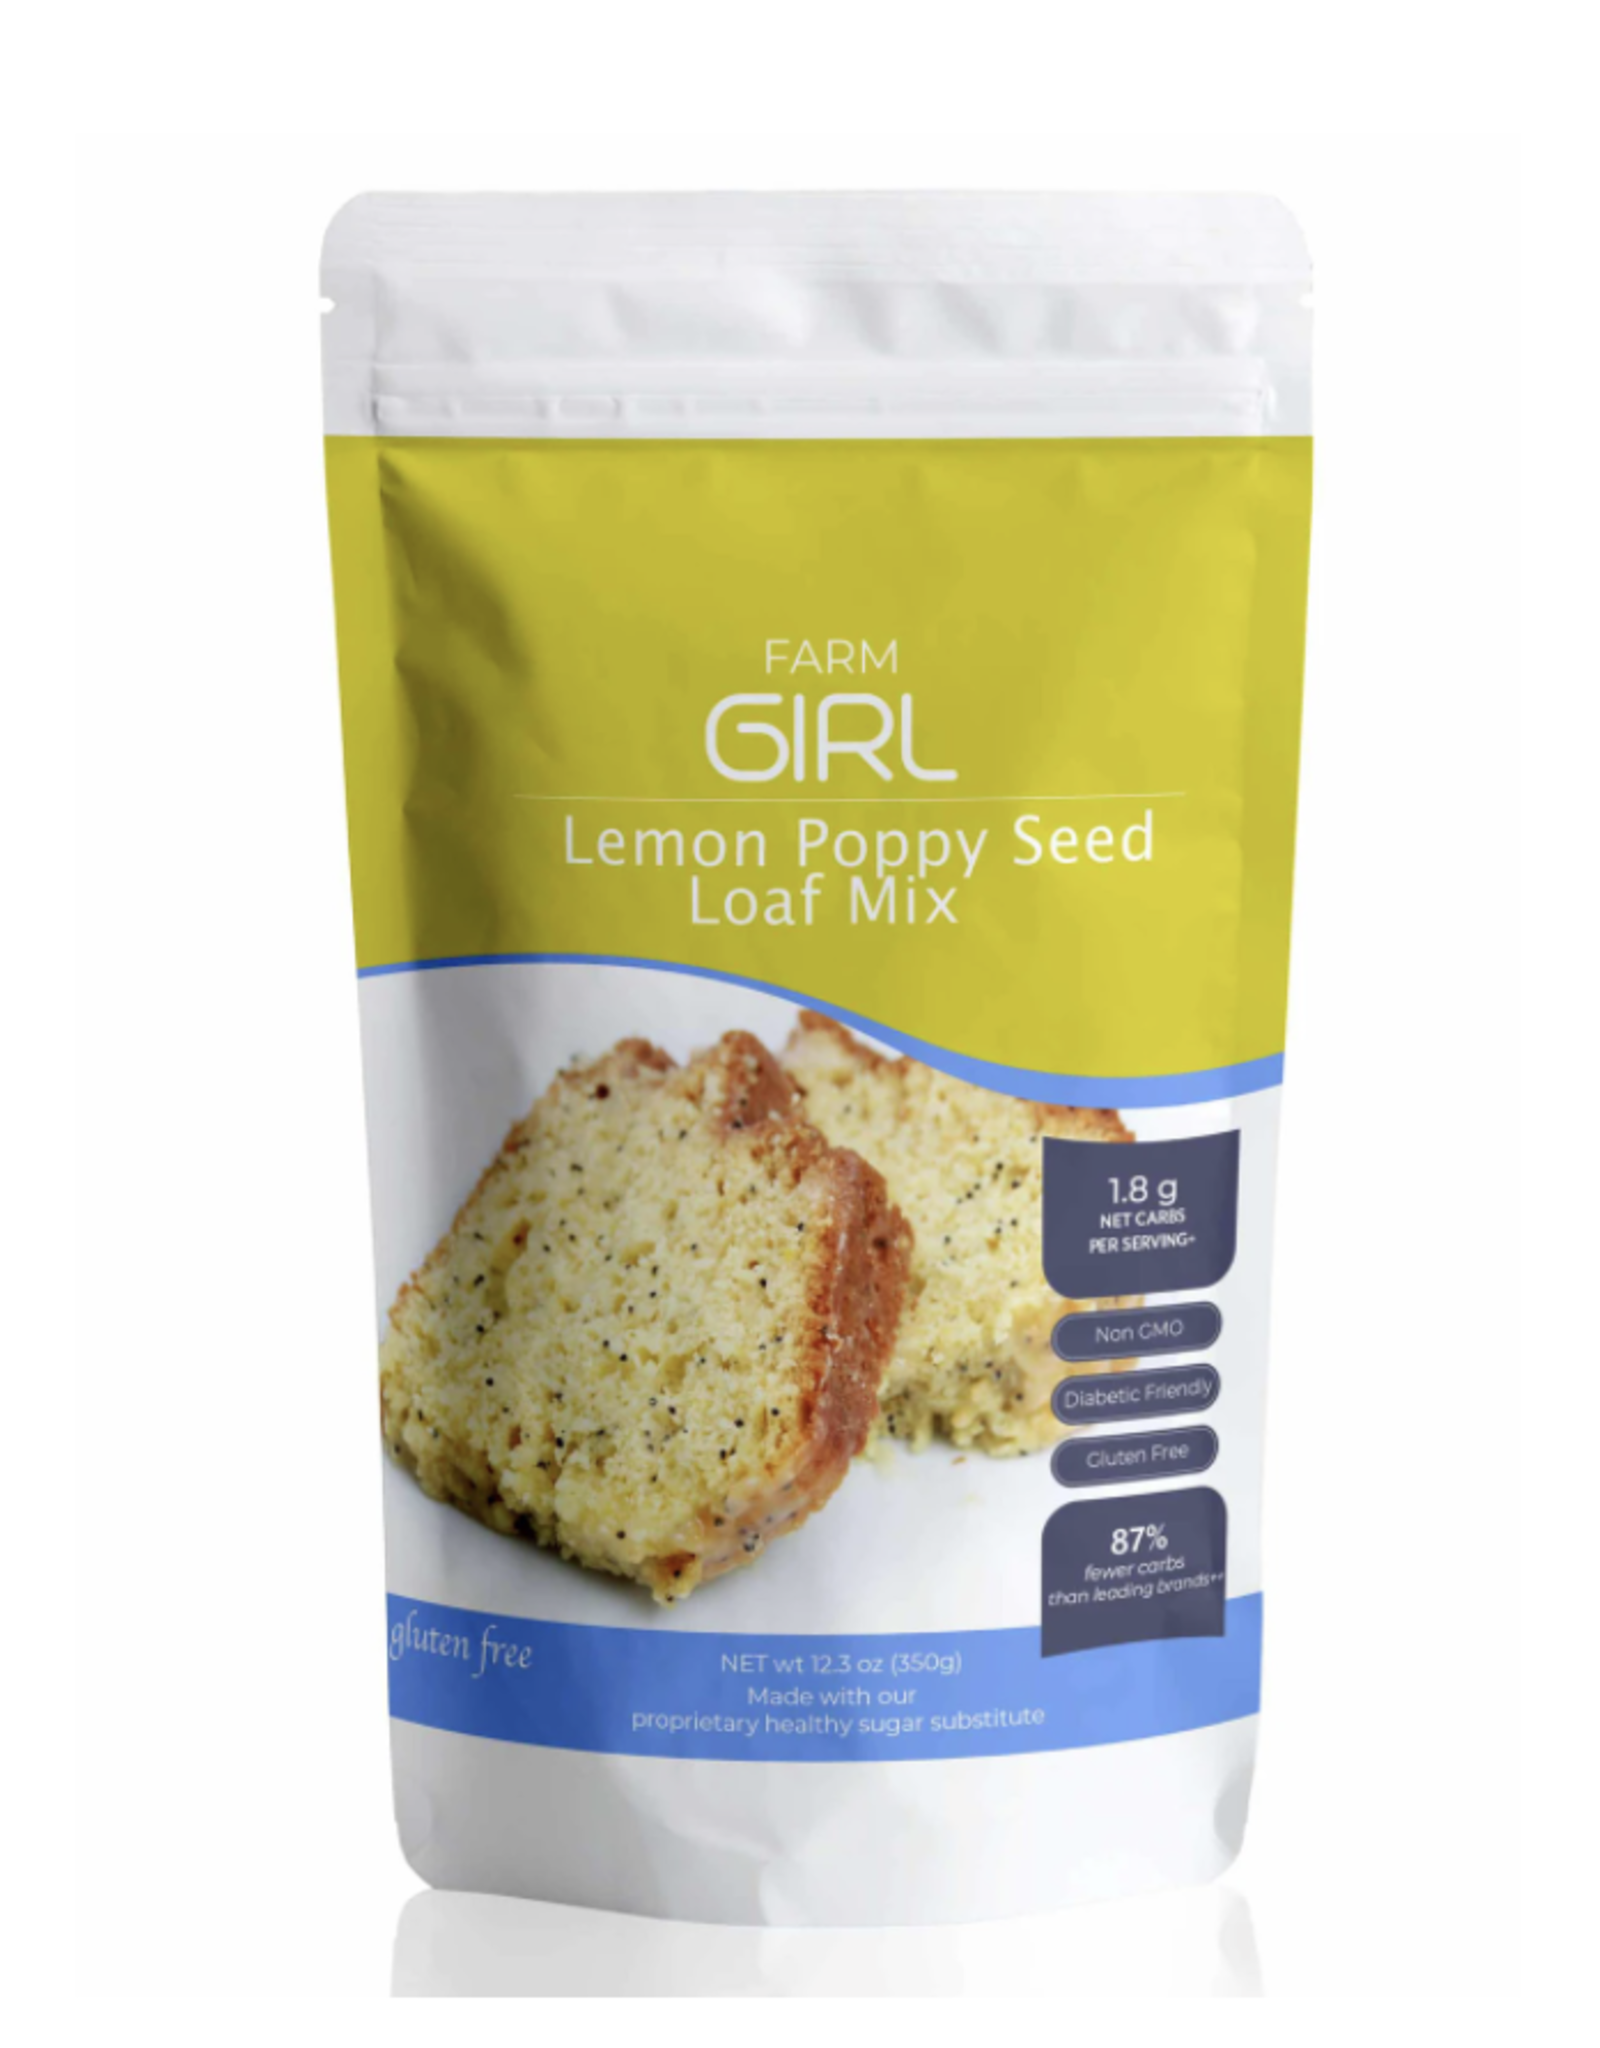 Farm Girl Farm Girl Lemon Poppy Seed Loaf Mix